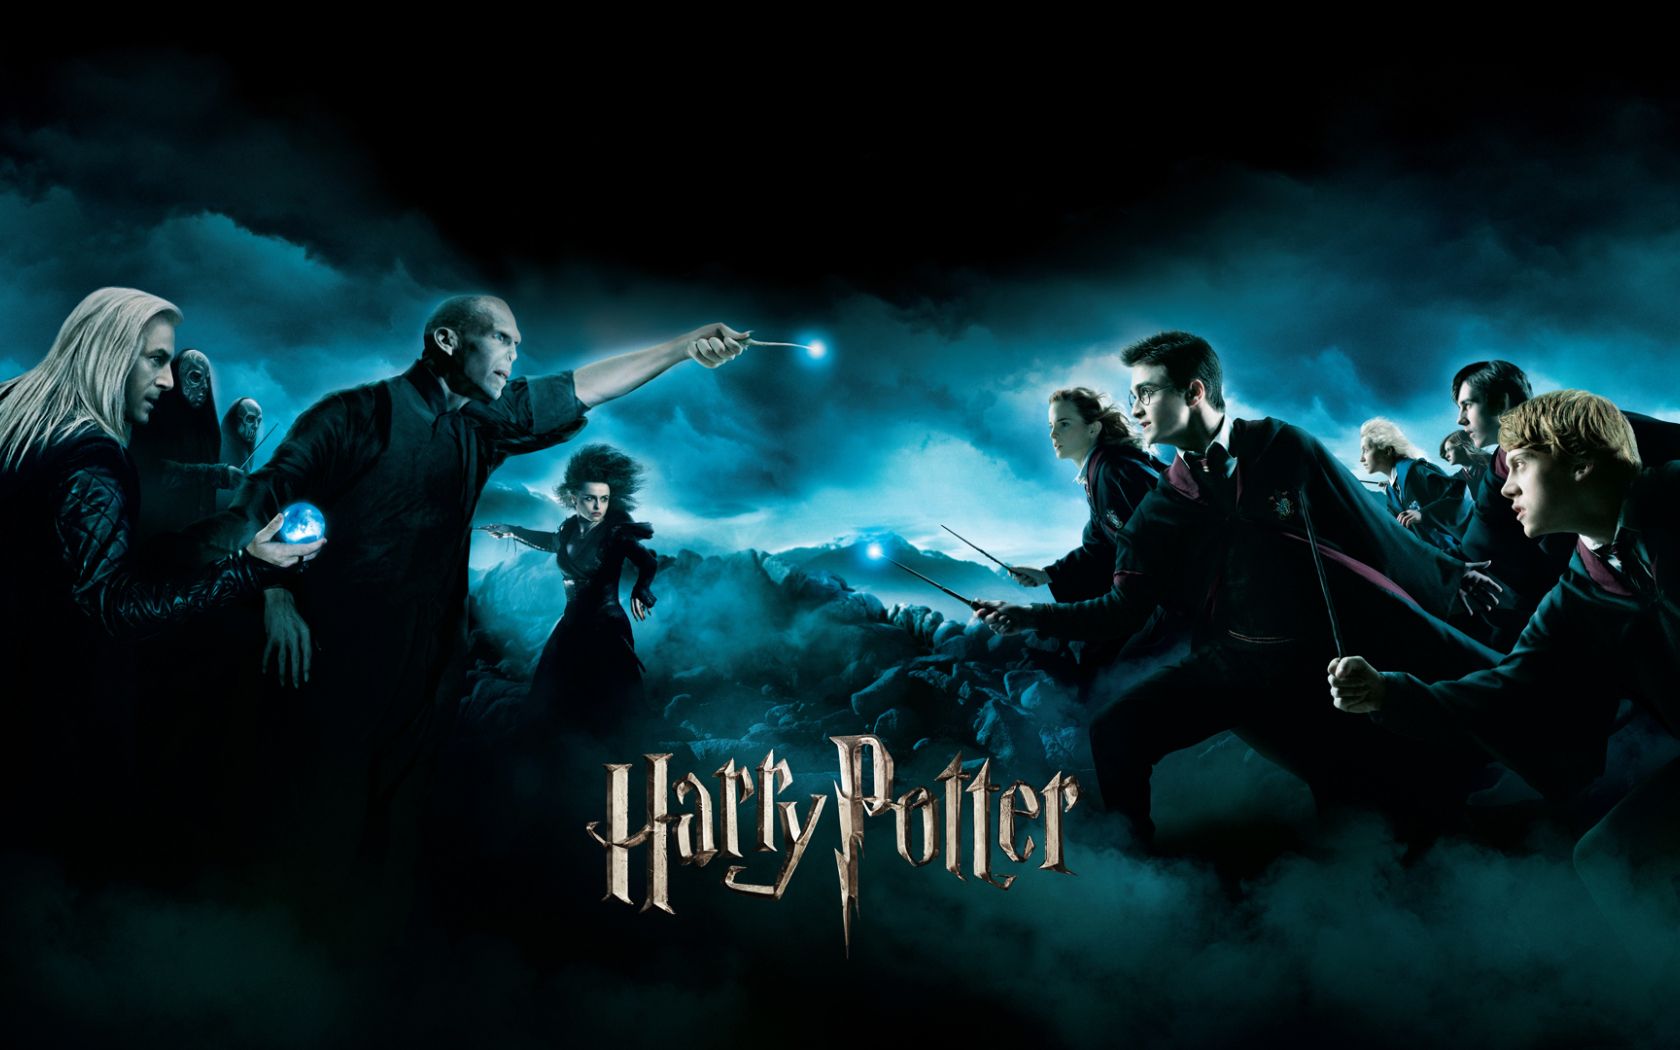 Free download 25 Top Harry Potter Wallpaper [1920x1080] for your Desktop, Mobile & Tablet. Explore Cute Harry Potter Wallpaper. Harry Potter Image and Wallpaper, Harry Potter Phone Wallpaper